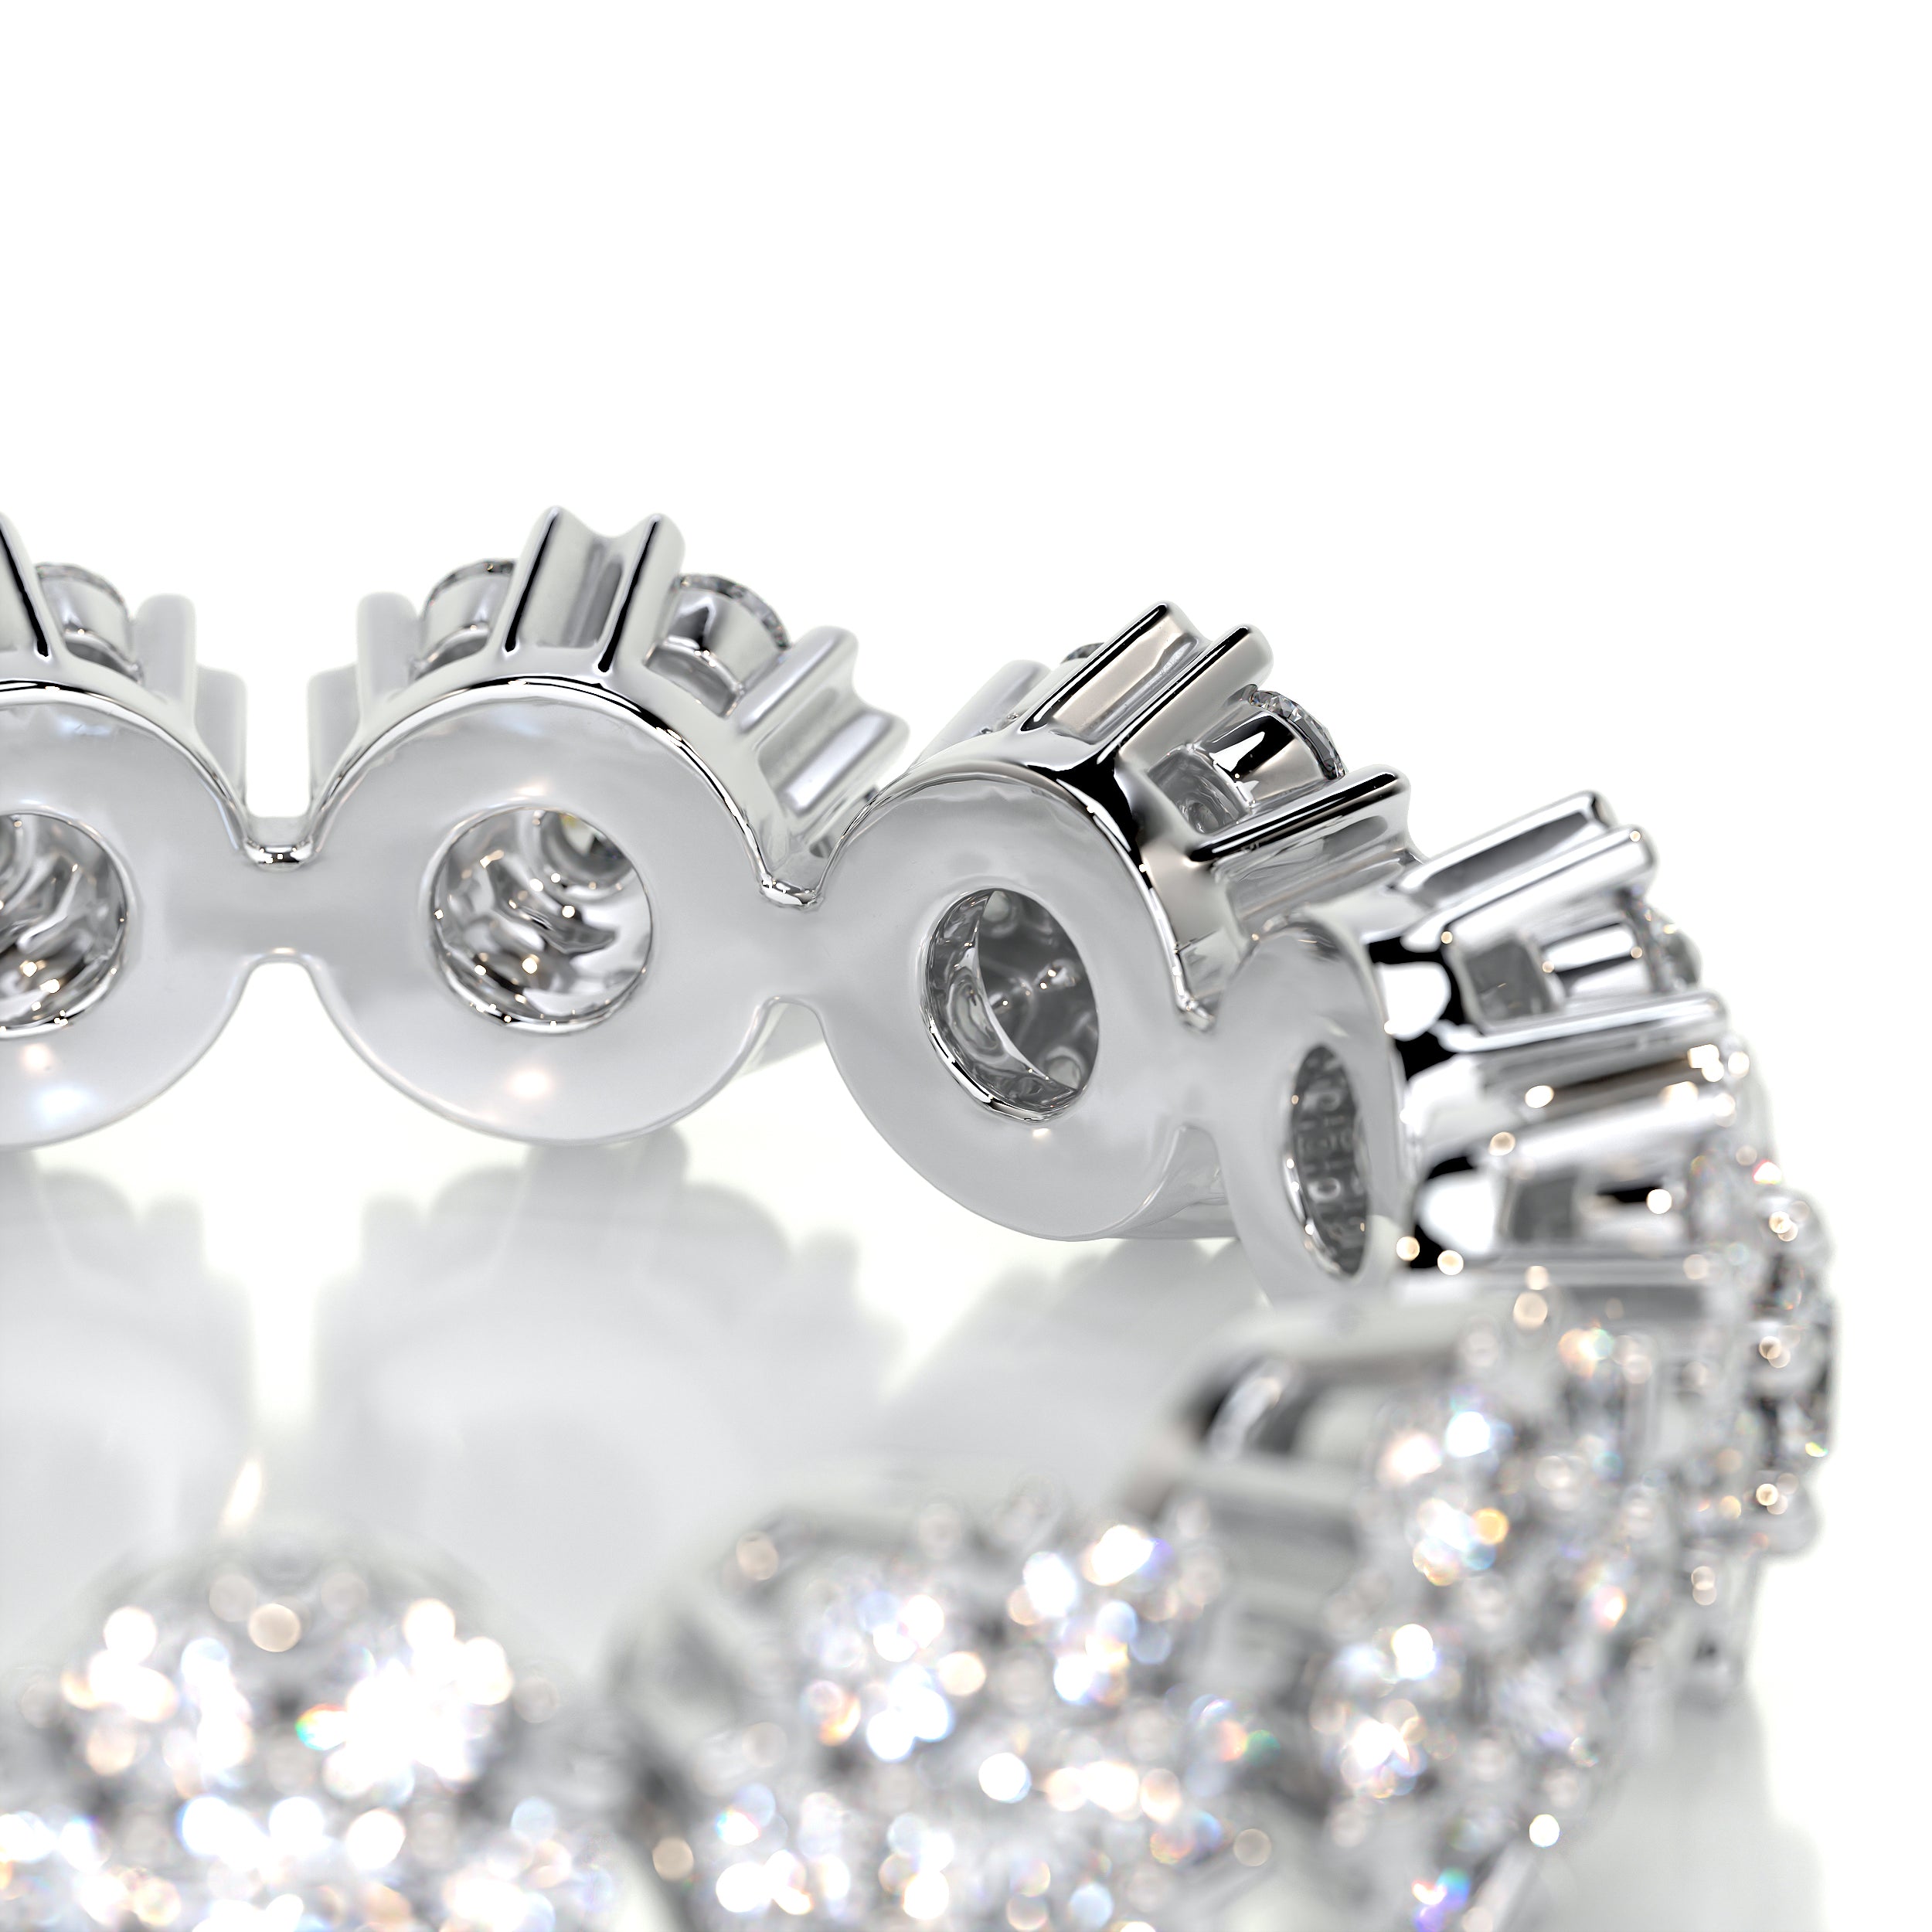 Holly Diamond Wedding Ring   (1 Carat) -Platinum